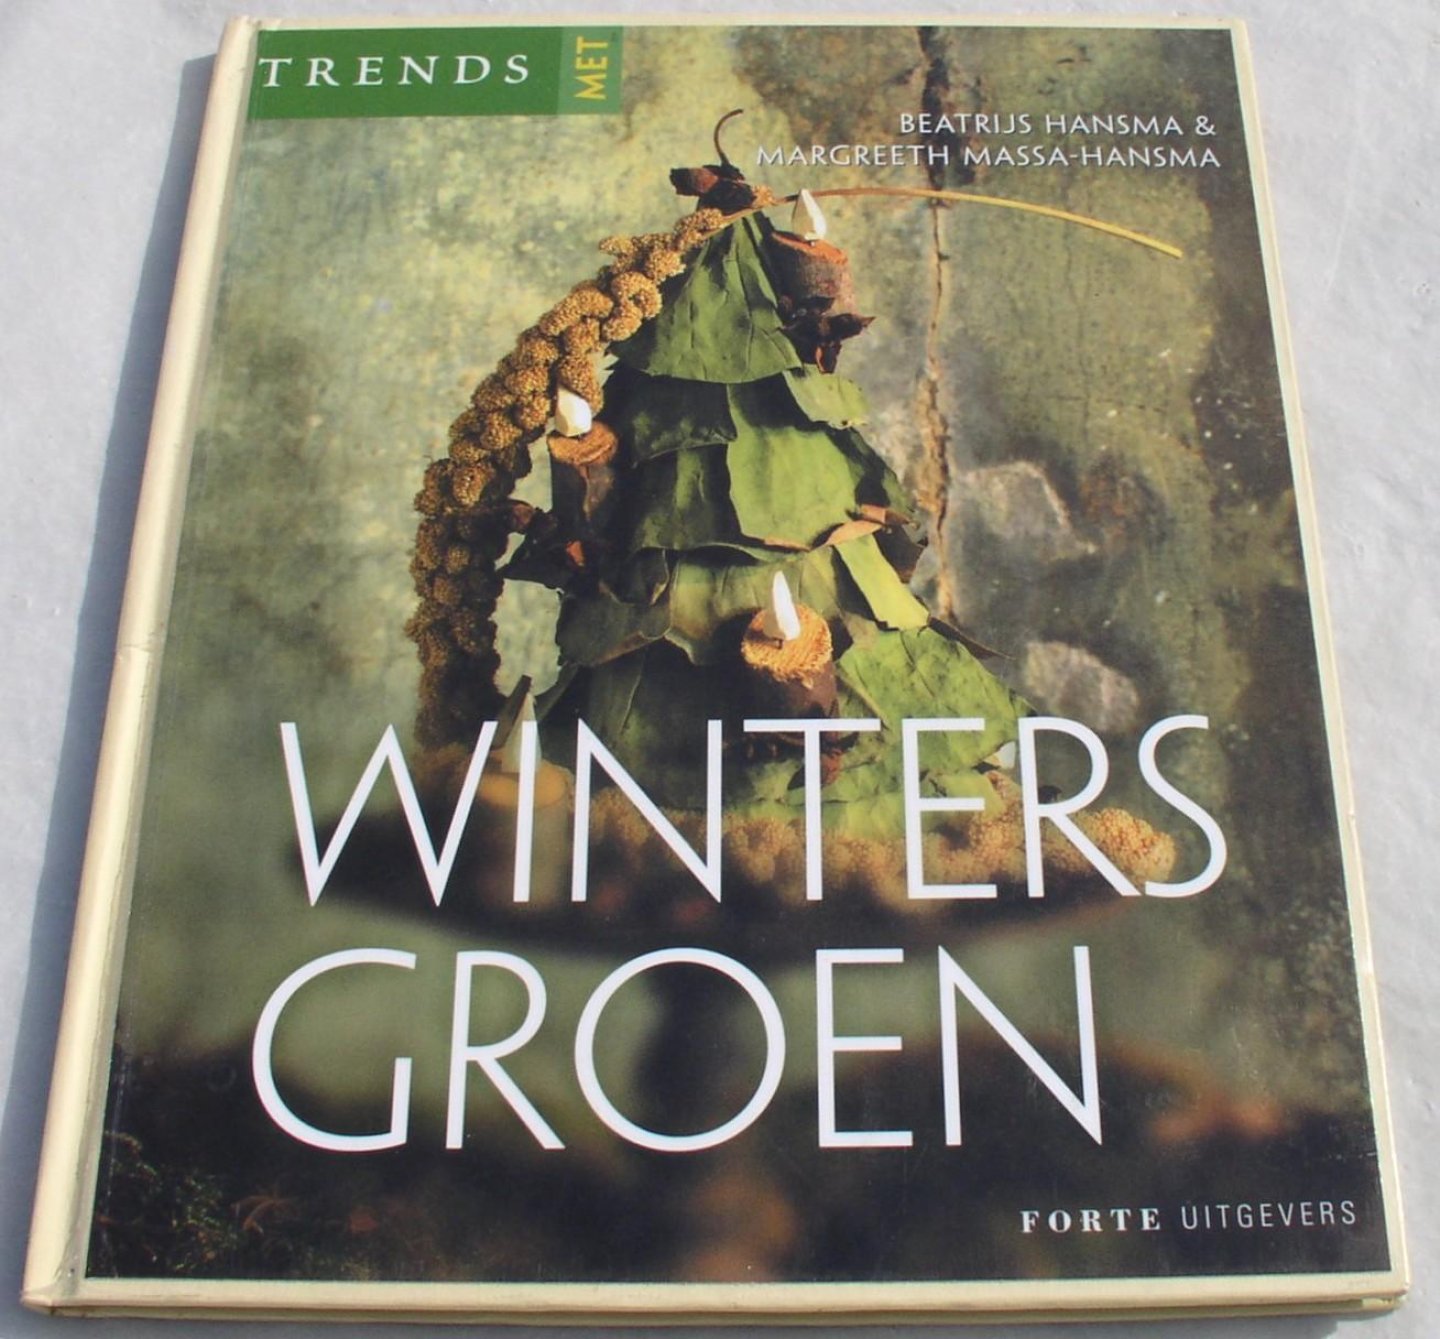 Hansma, Beatrijs & Massa-Hansma, Margreeth - Trends met winters groen